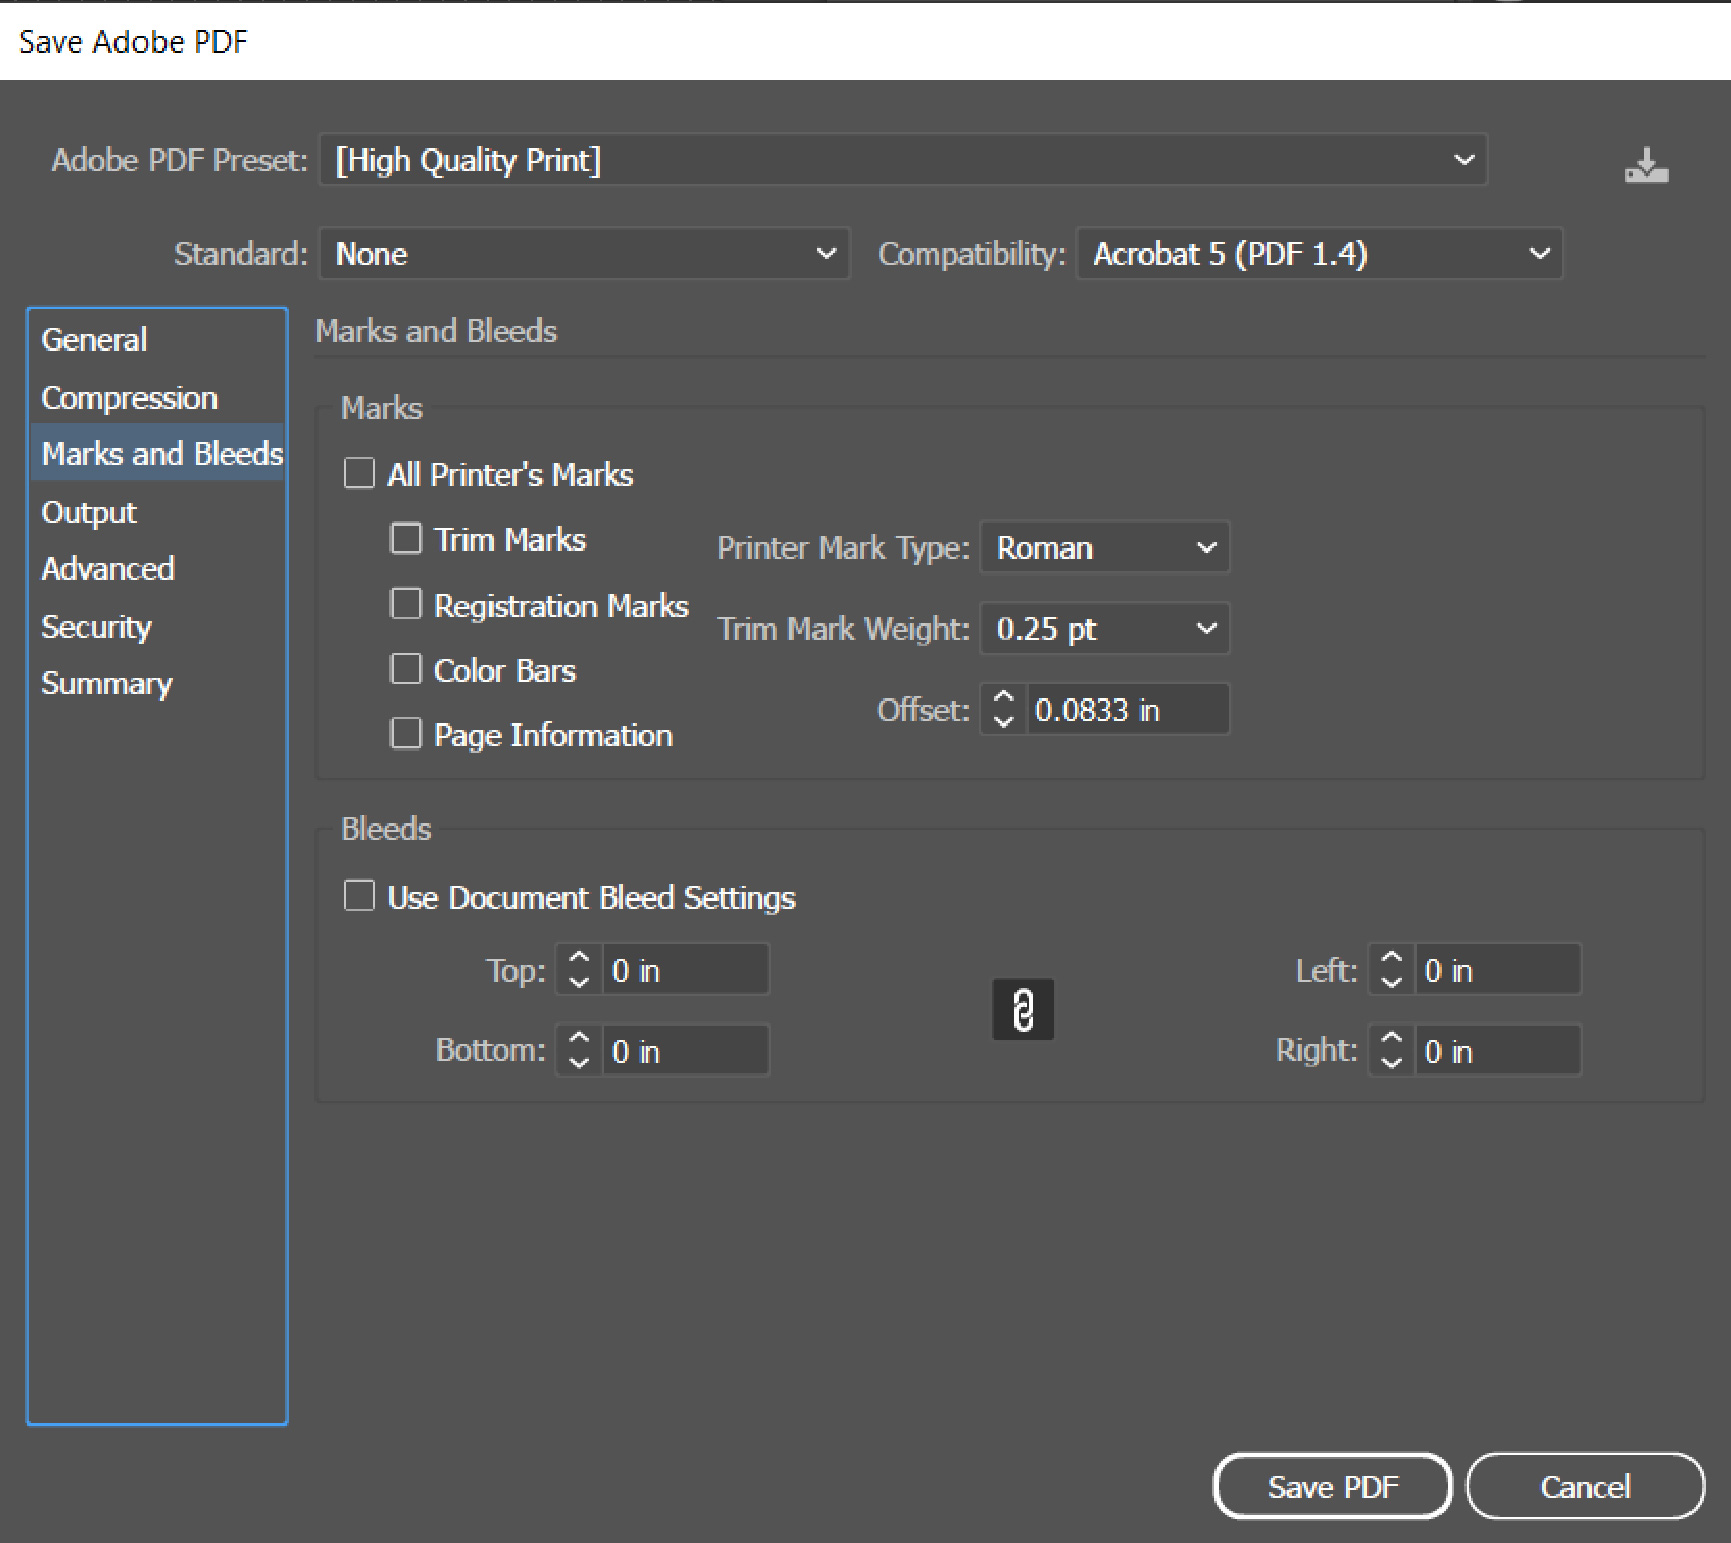 Adobe Illustrator_Print PDF Setup_Marks and Bleeds Tab_Screenshot